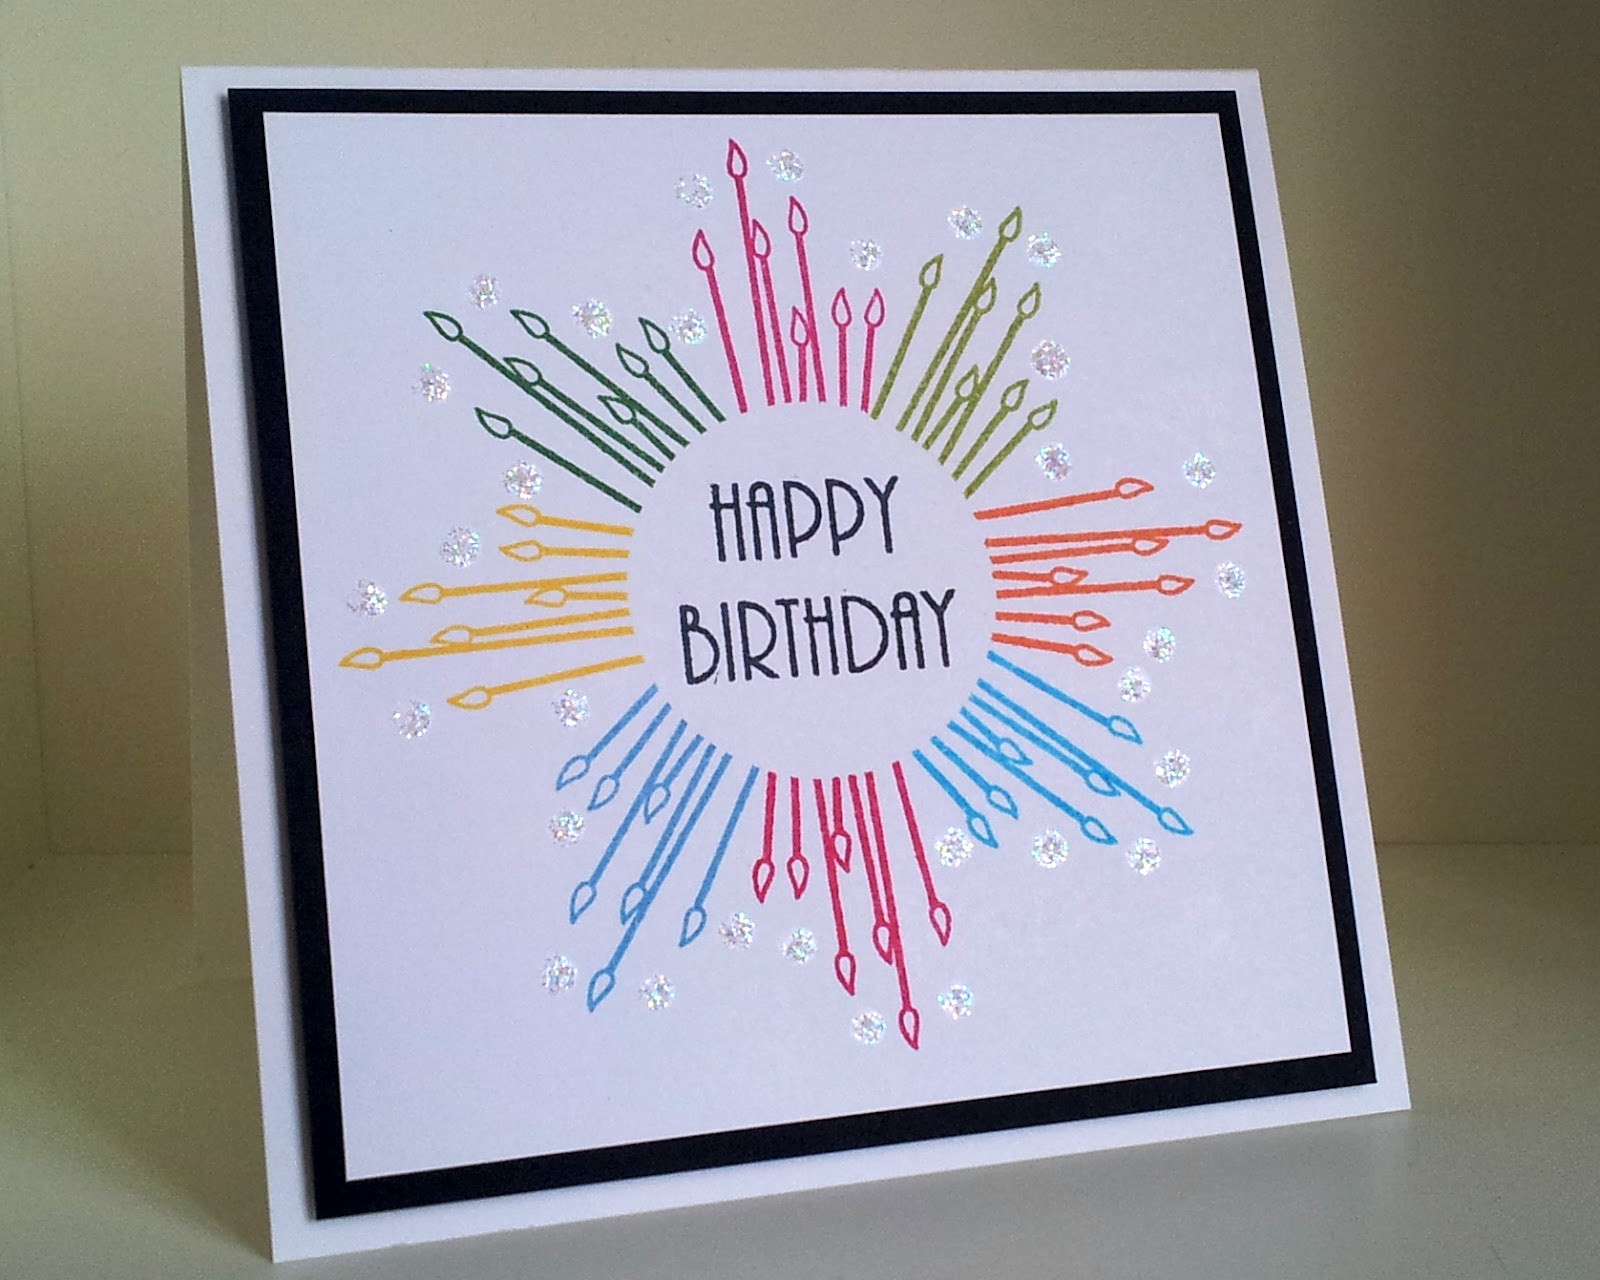 Creative Handmade Birthday Card Ideas Cool Birthday Card Designs 24 Cool Handmade Birthday Card Ideas Diy